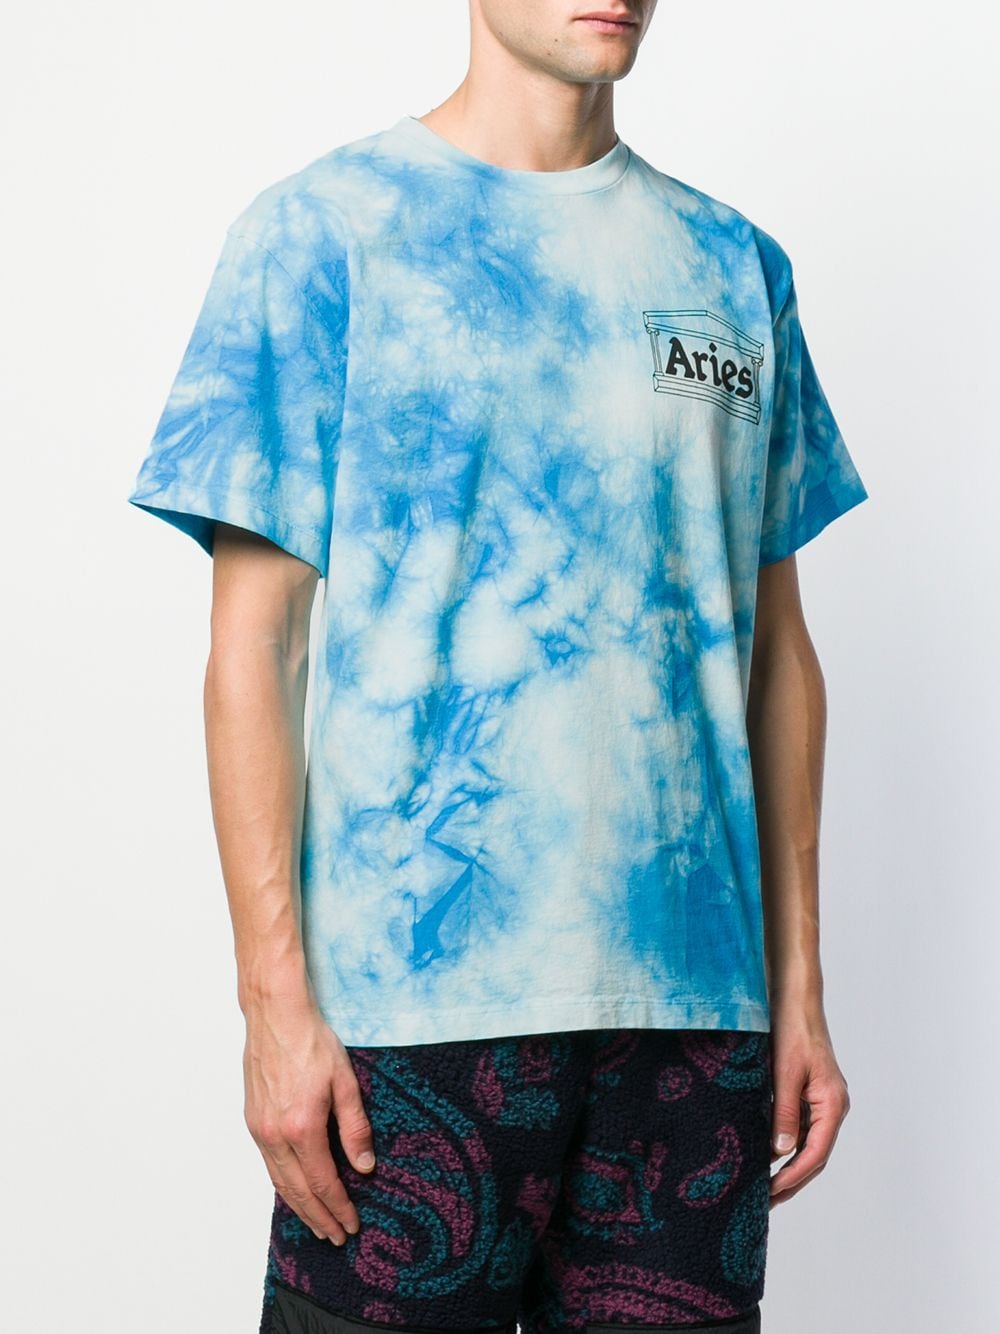 фото Aries футболка с принтом тай-дай